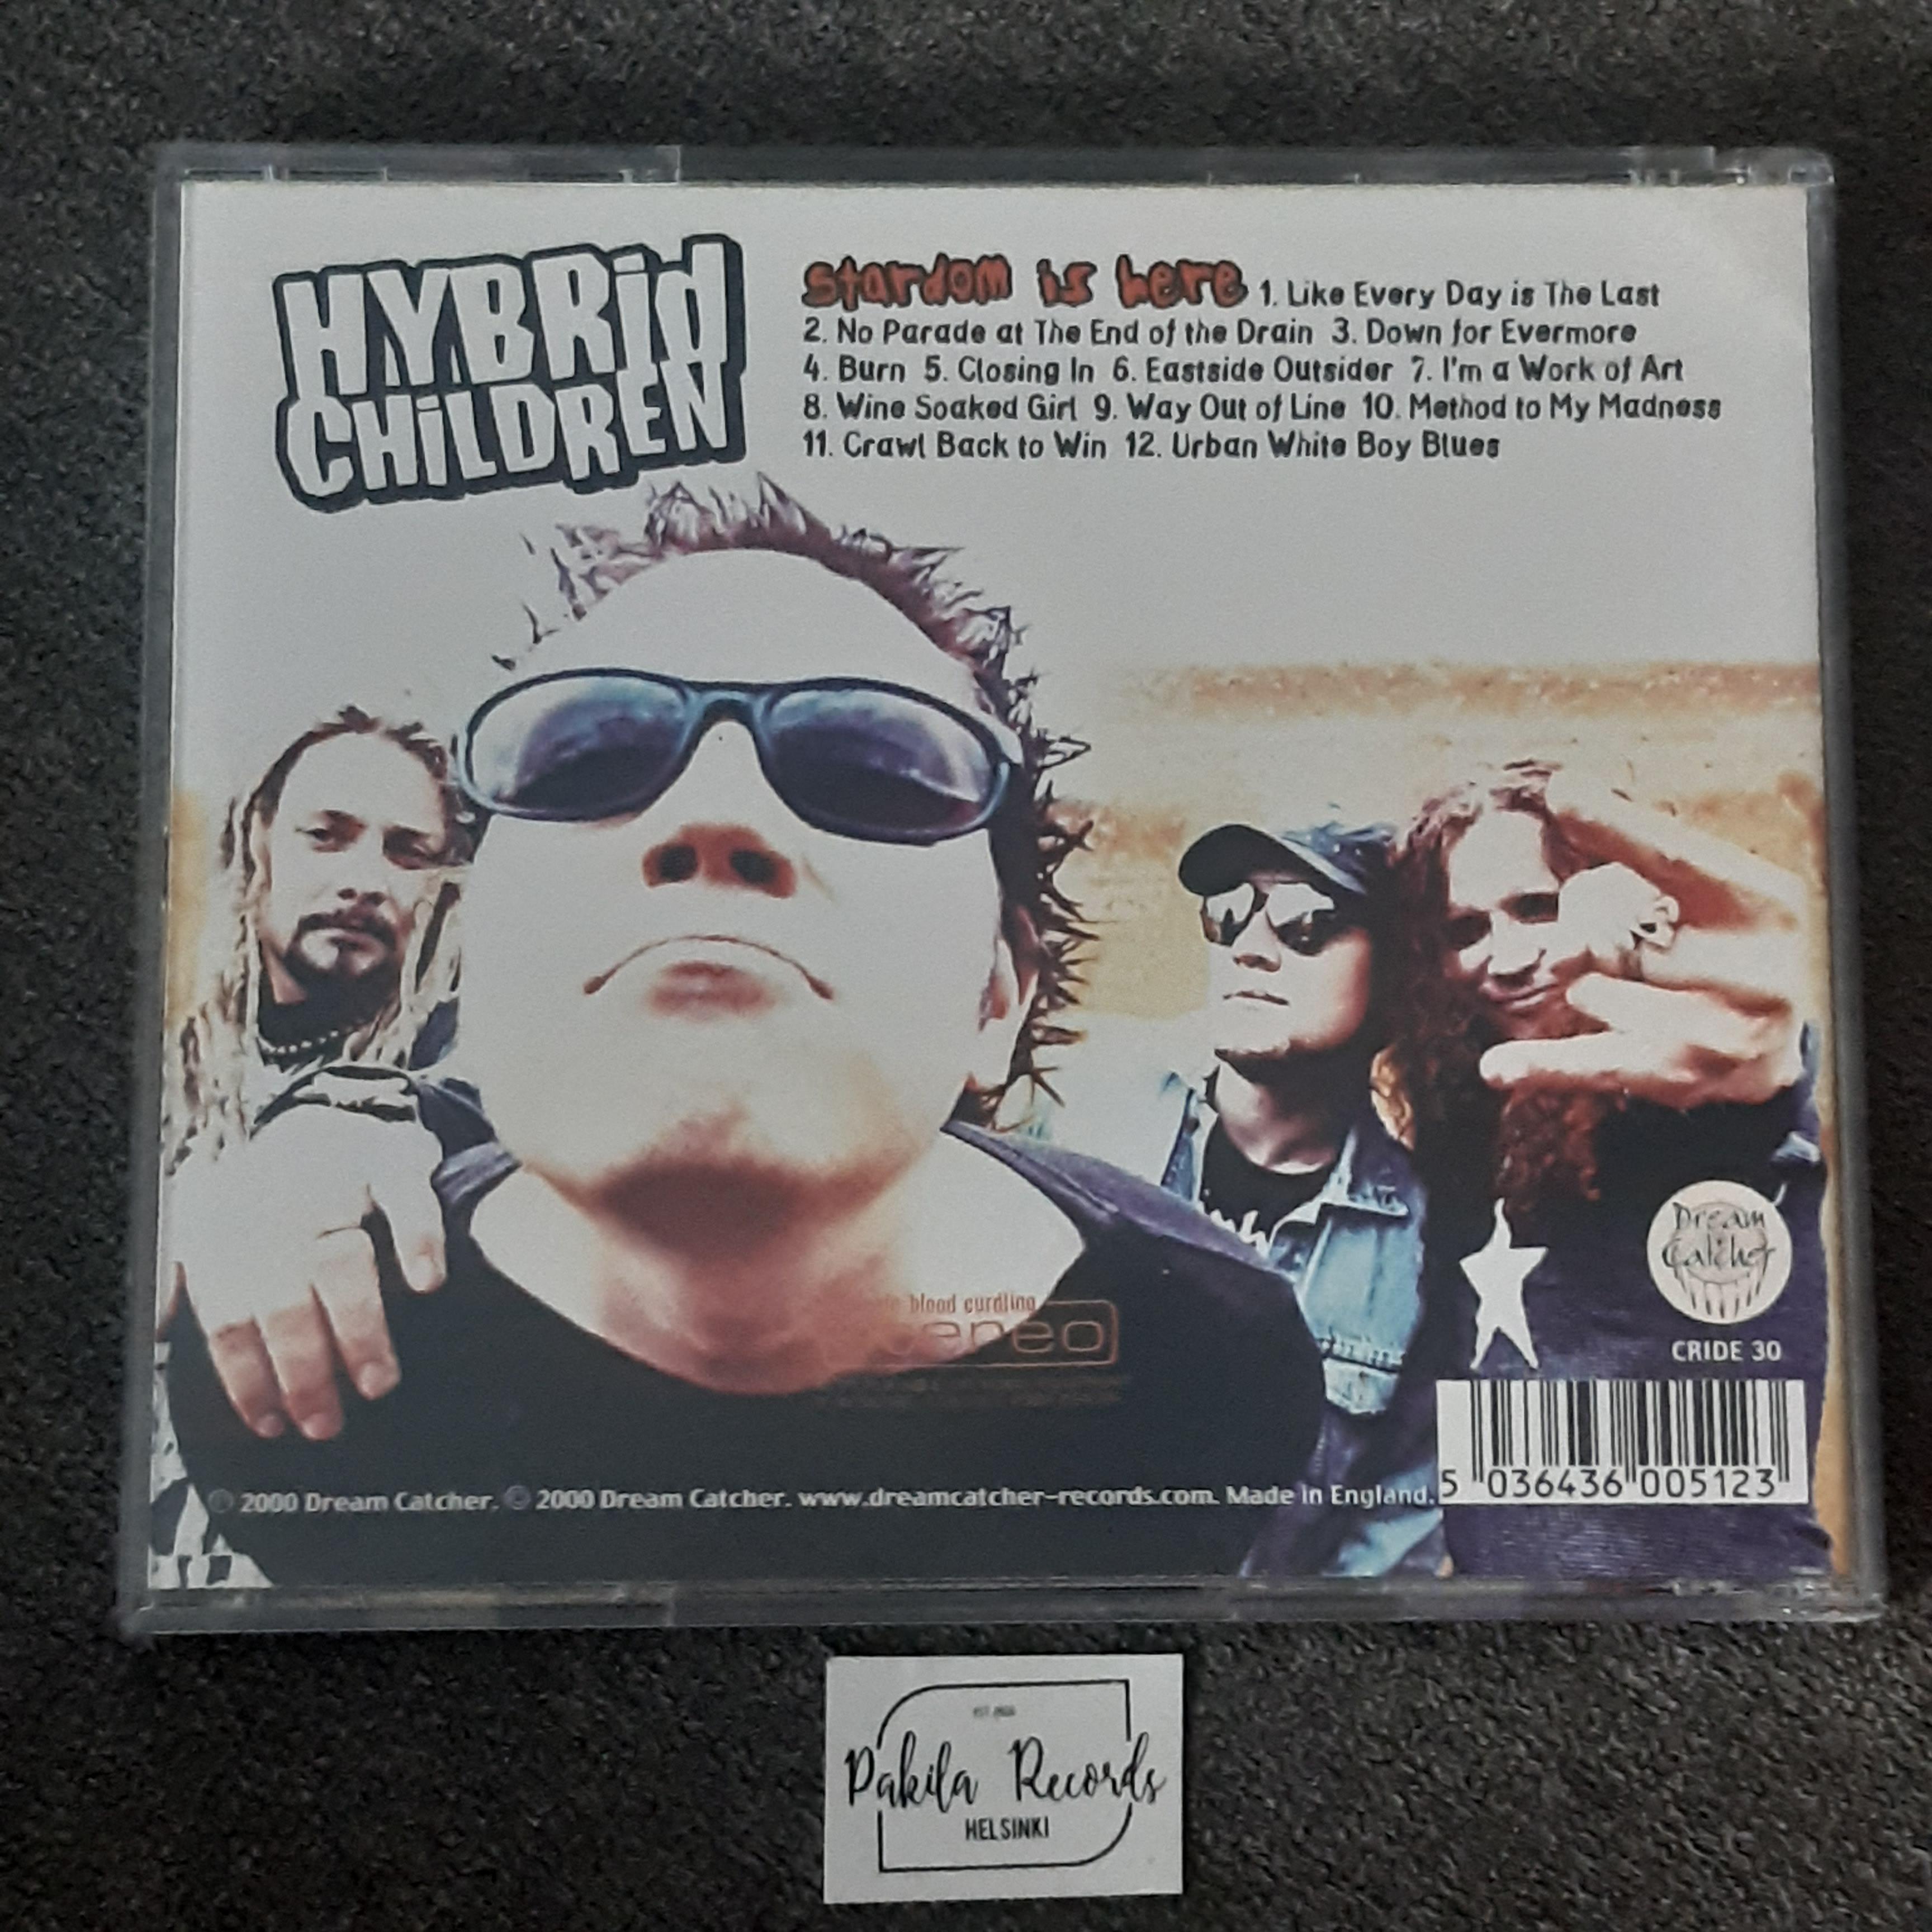 Hybrid Children - Stardom Is Here - CD (käytetty)